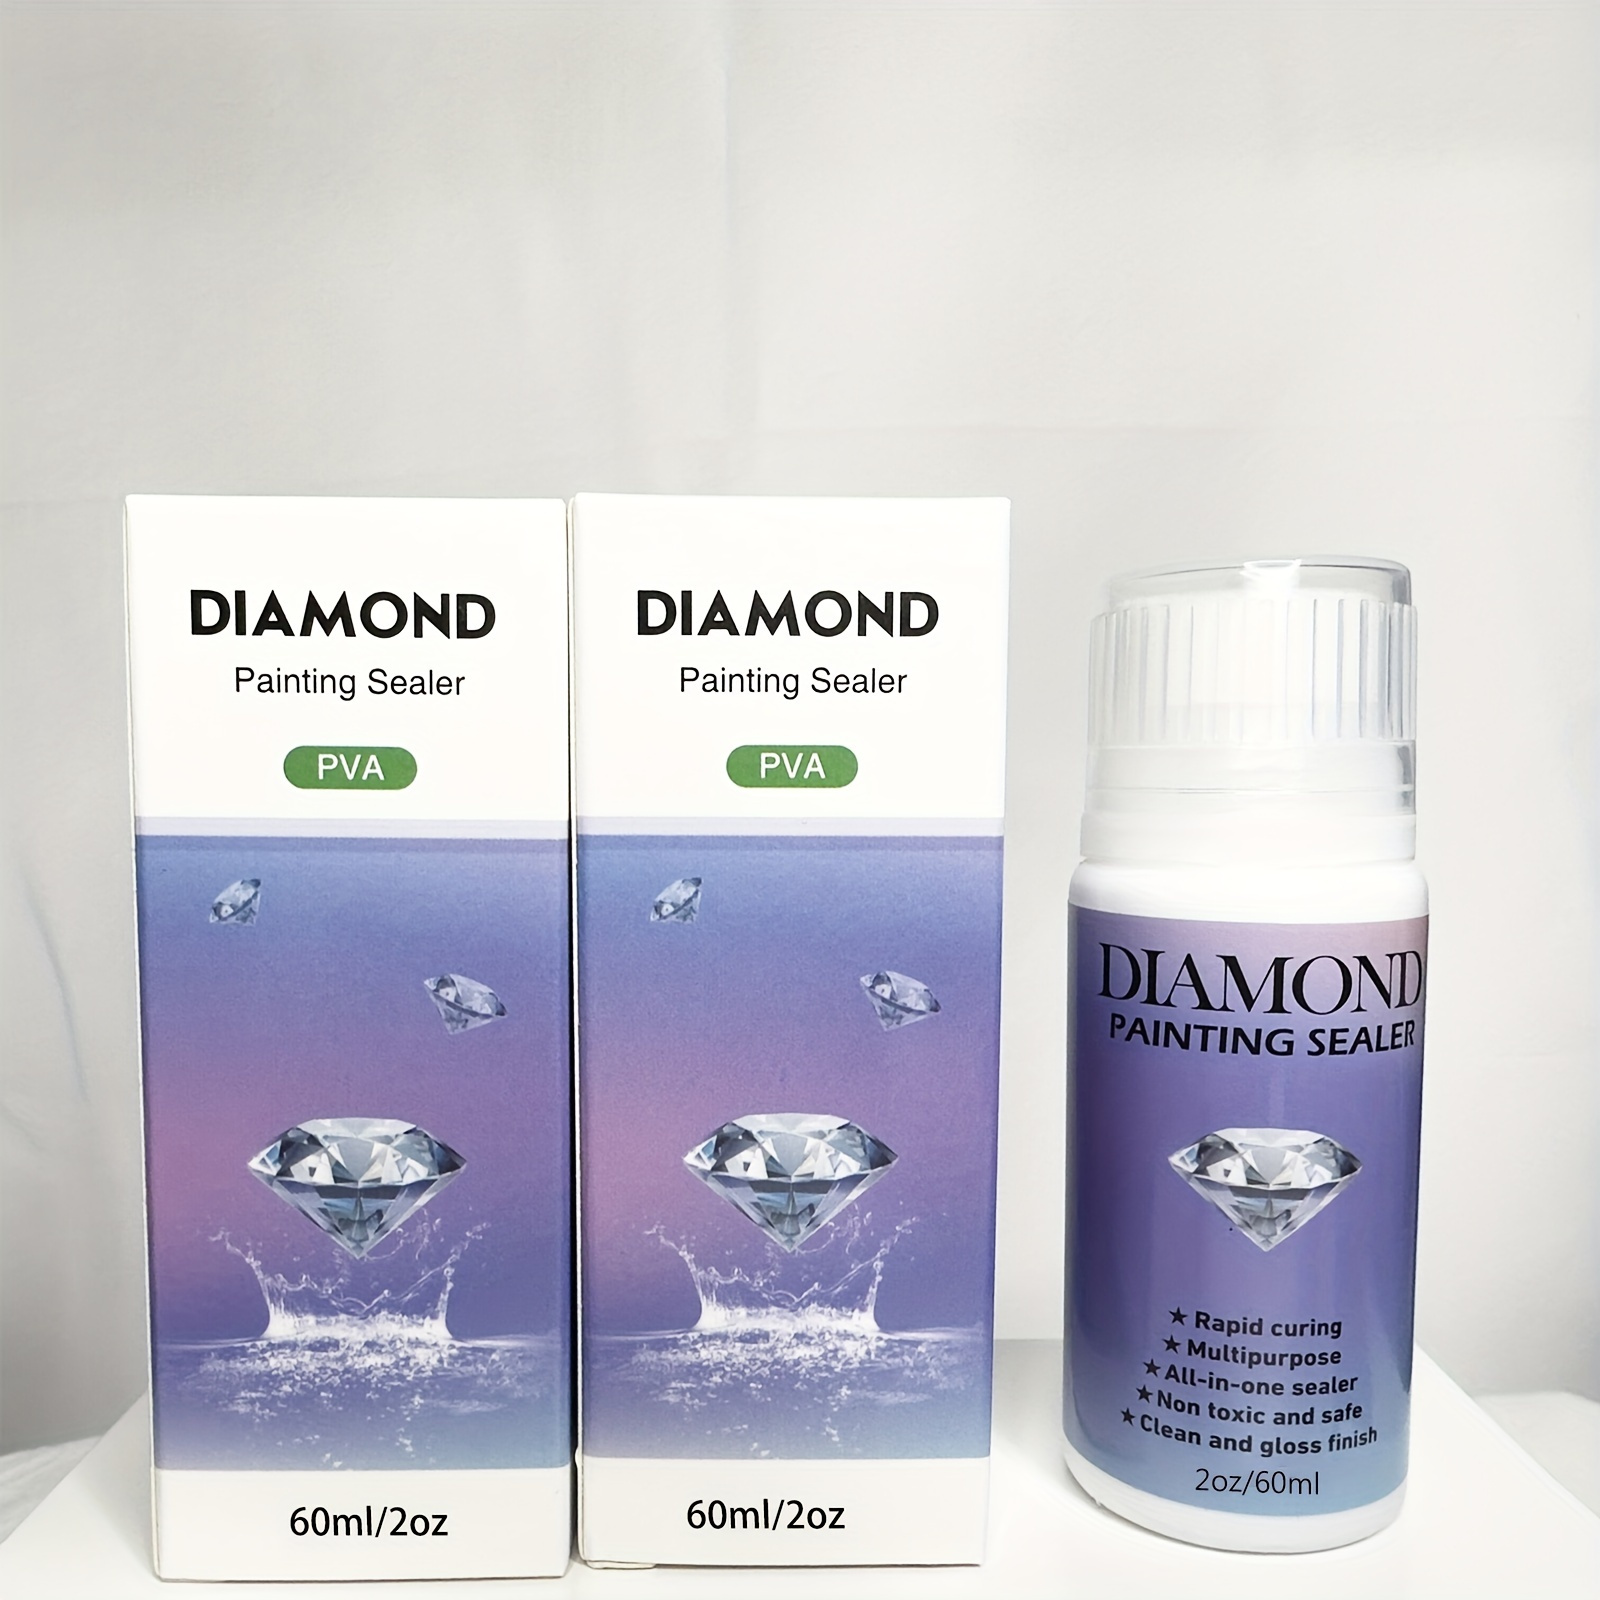 Diamond Painting Sealer 200ml, Homemade Sponge Head Art Sealant For 5d  Diamond Painting Kit. Permanent Sealing Agent To Keep Diamond Painting  Shiny